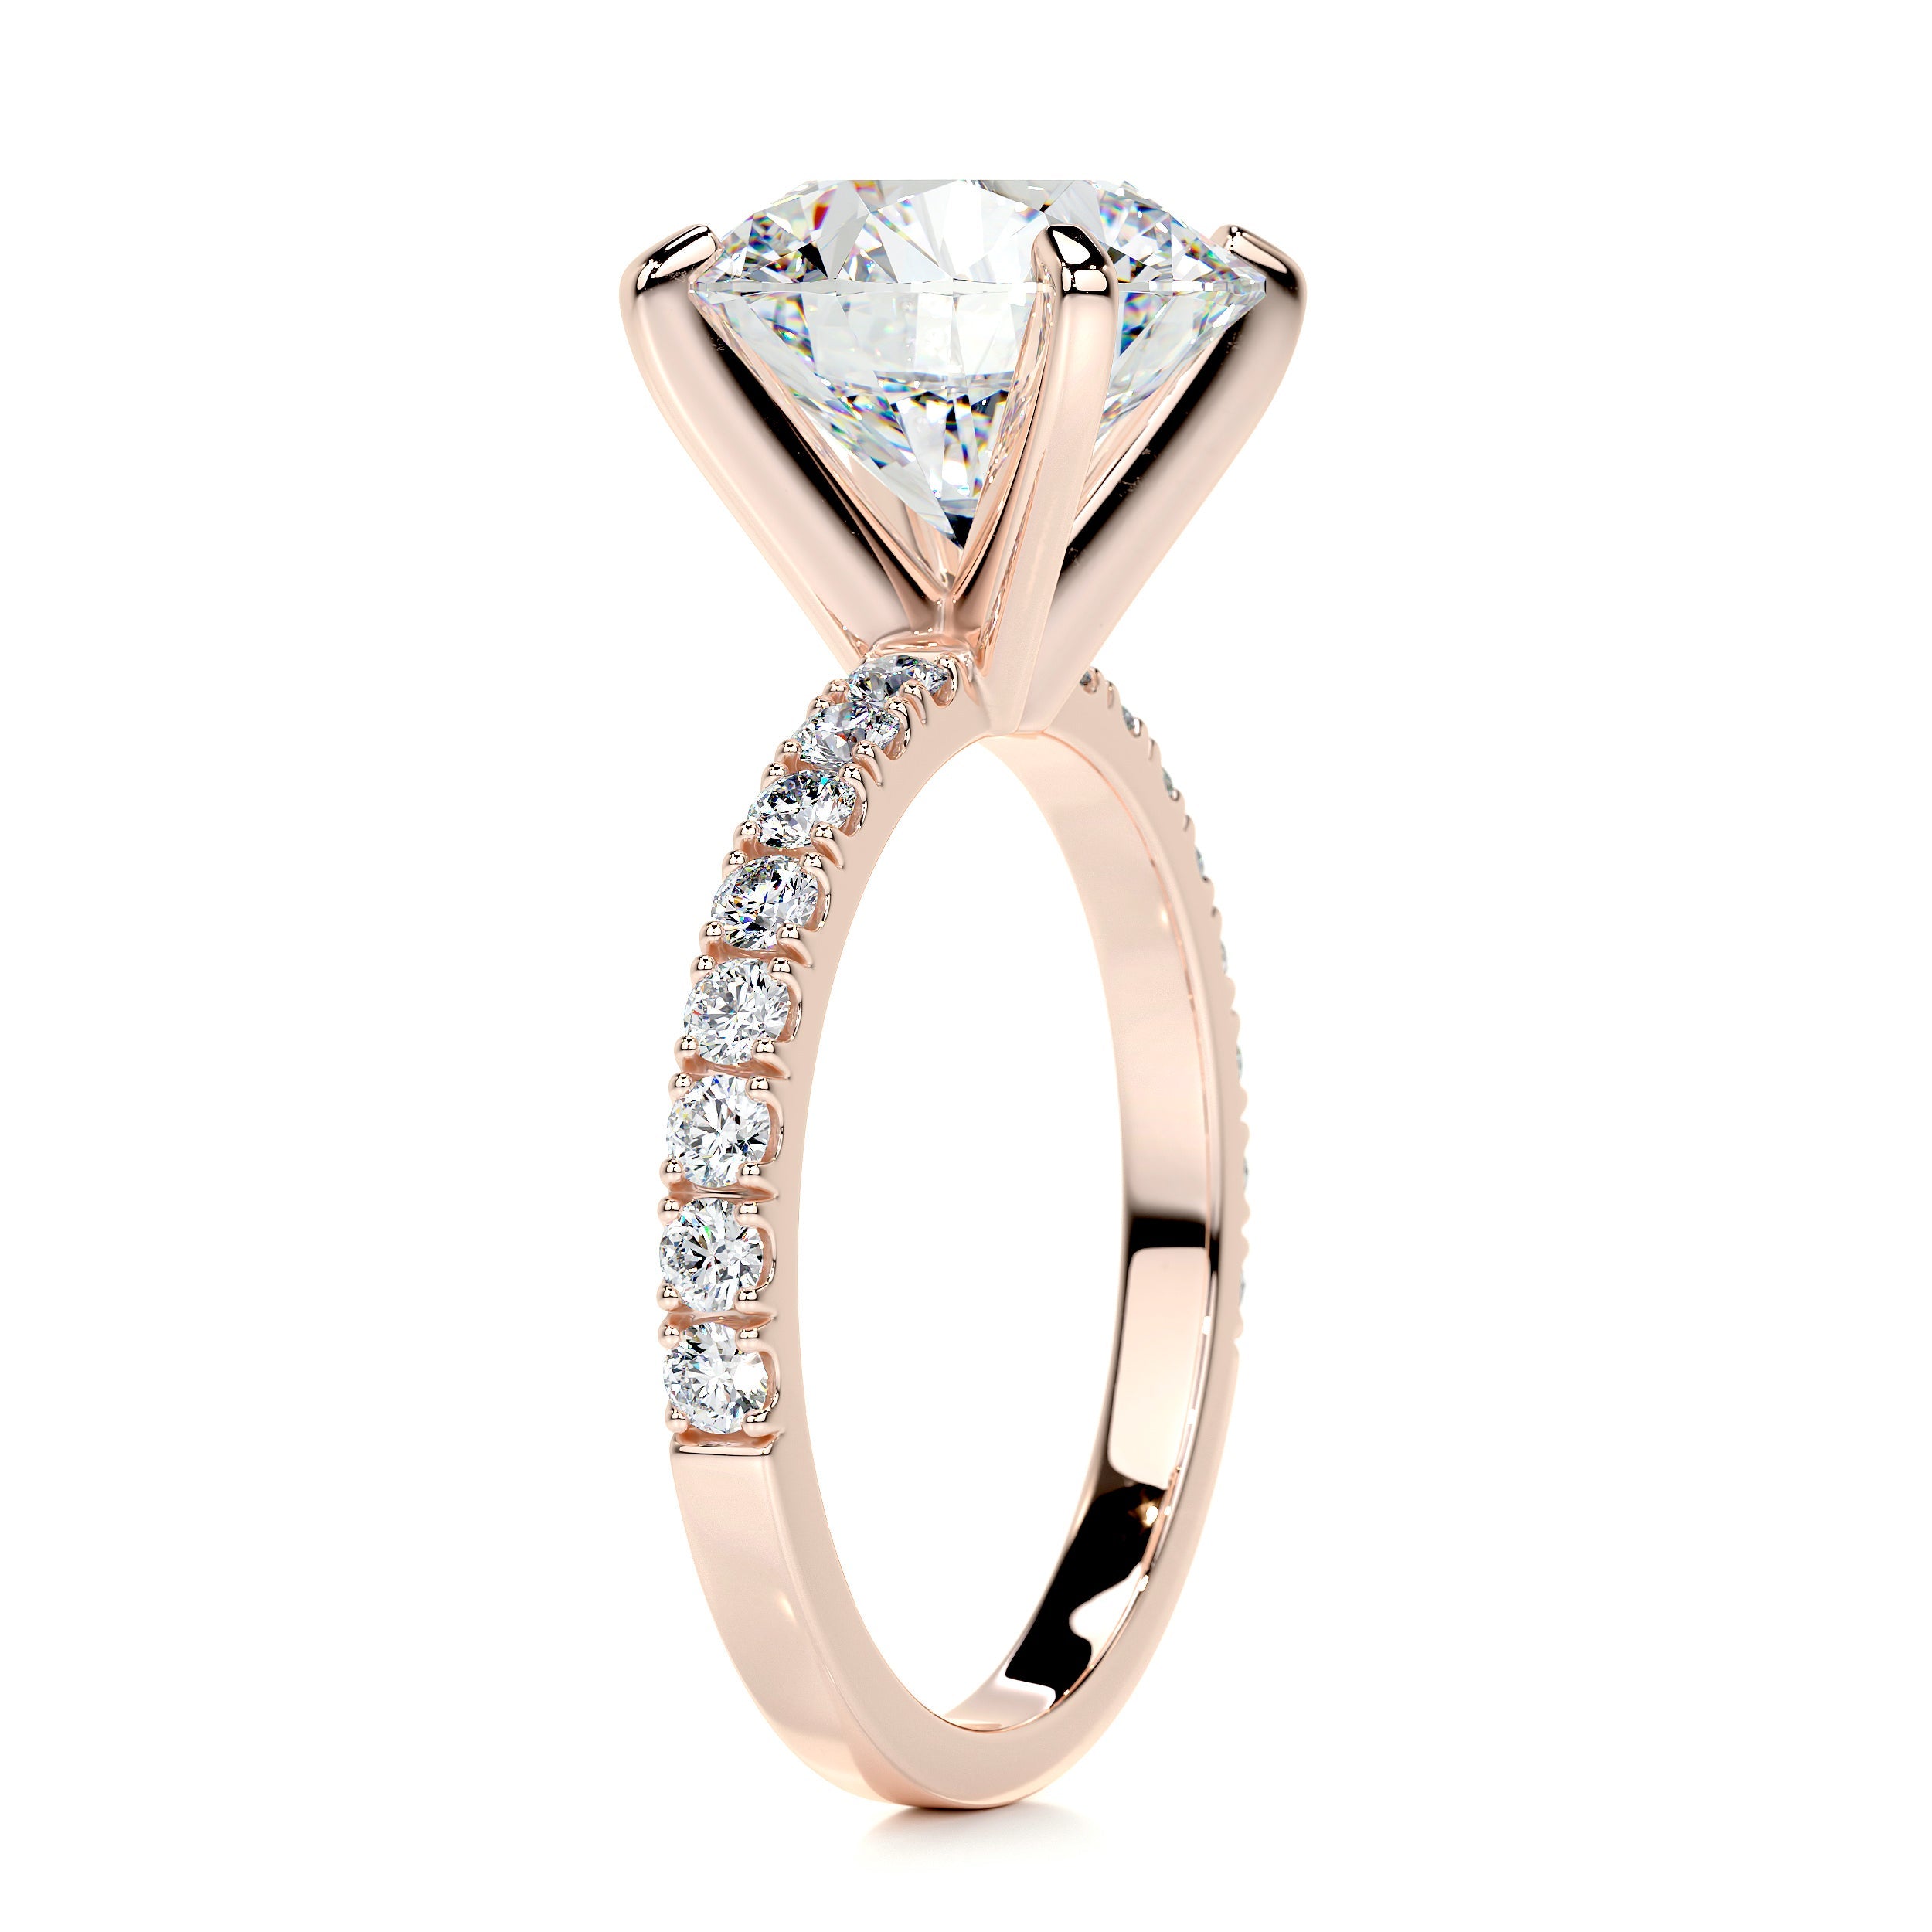 Alison Moissanite & Diamonds Ring   (5.5 Carat) -14K Rose Gold (RTS)